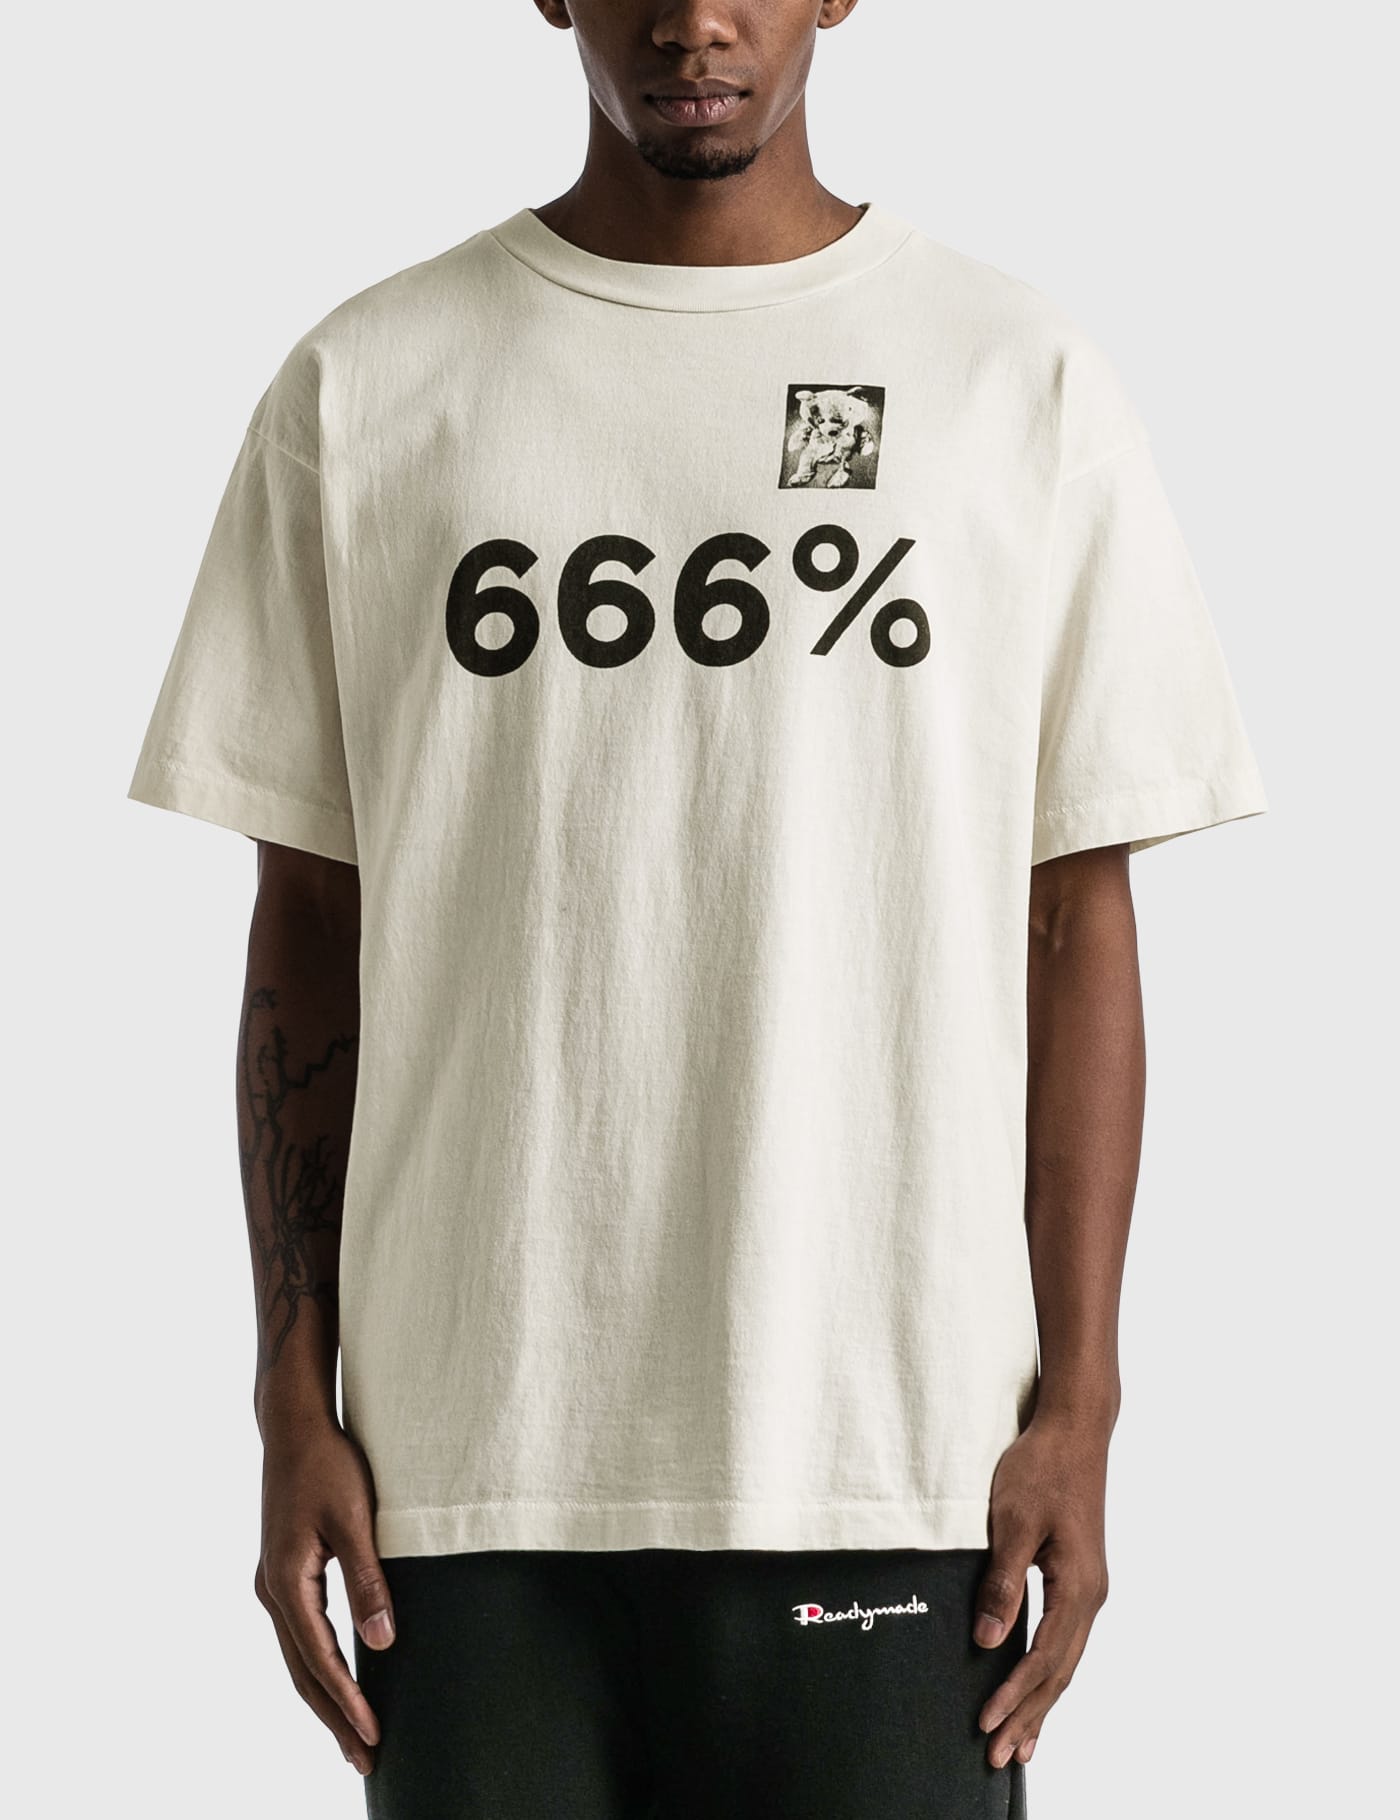 Saint Michael - 666% Tシャツ | HBX - ハイプビースト(Hypebeast)が